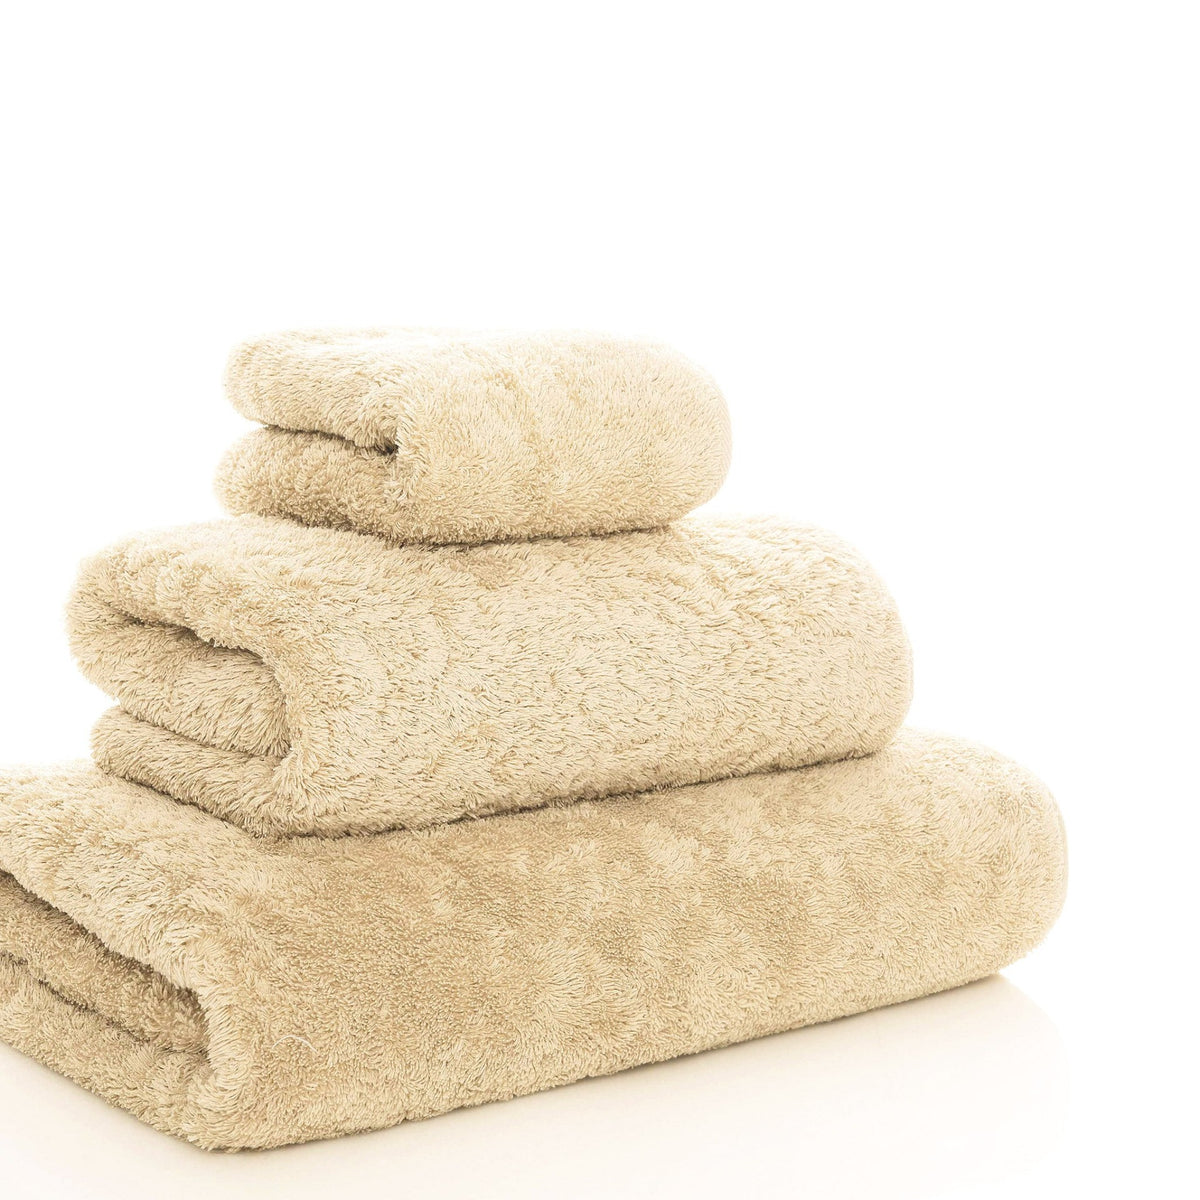 Side View of Graccioza Egoist Bath Towels Wheat